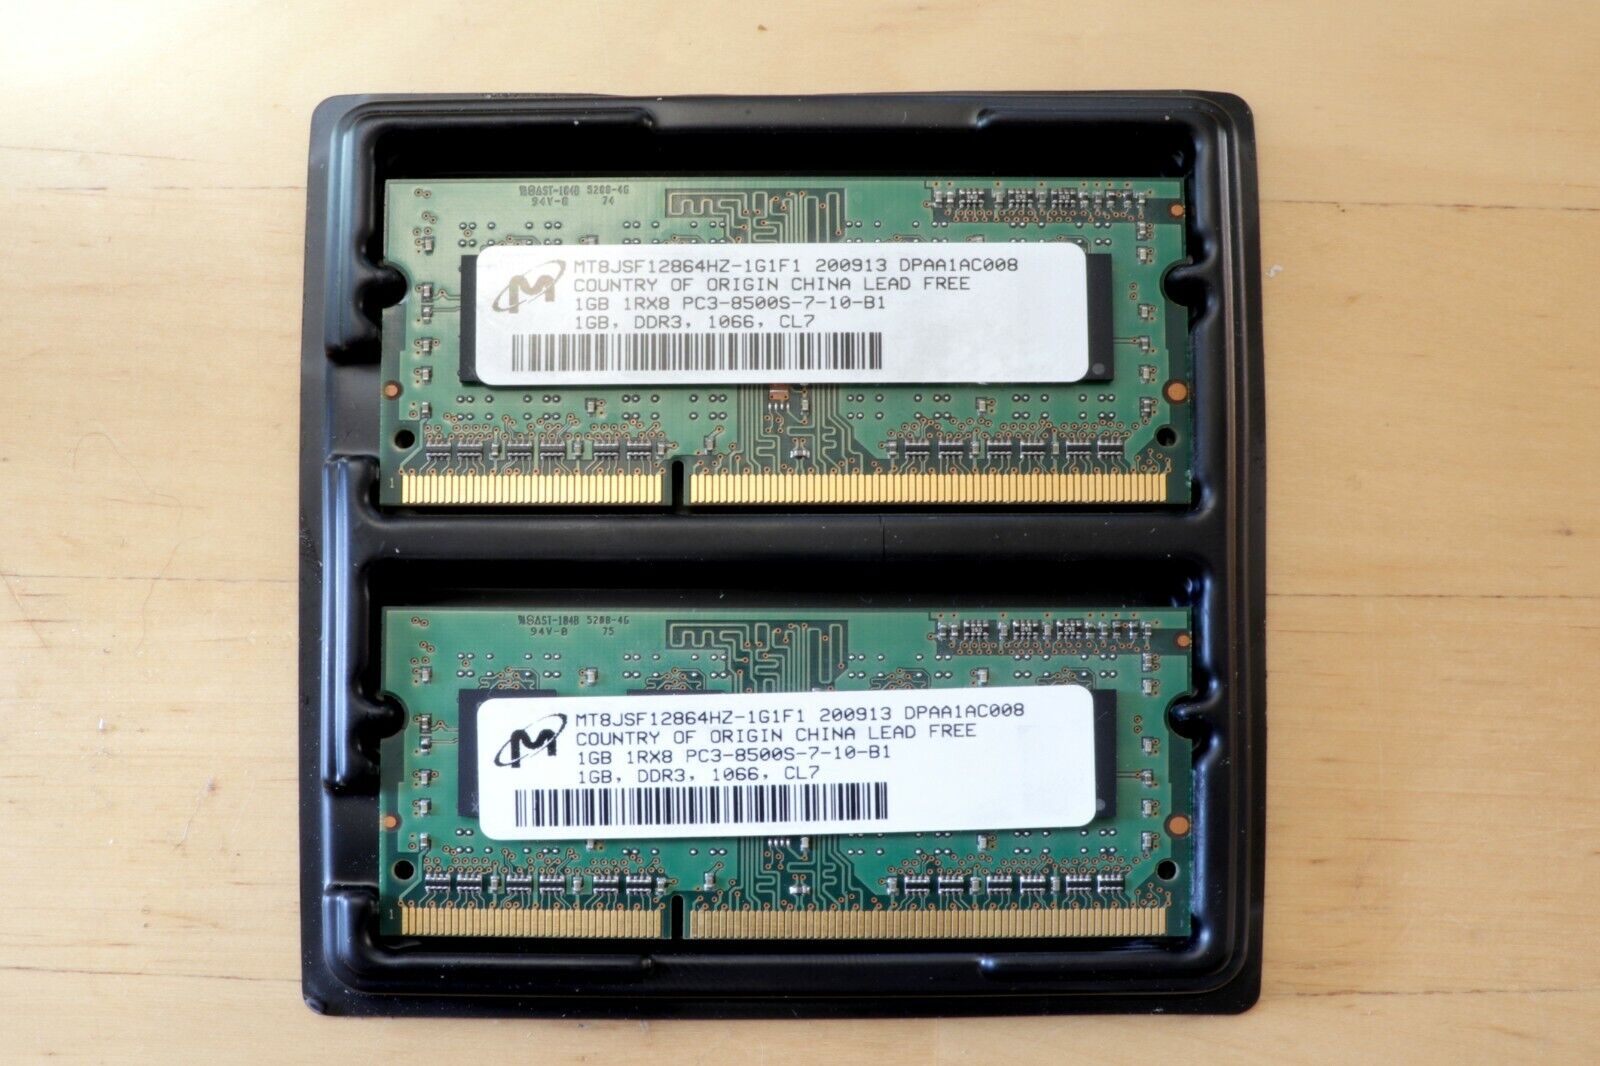 Micron 2GB (2 x 1GB DDR3) 1Rx8 PC3-8500S 1066 mhz MEMORY RAM MT8JSF12864HZ-1G1F1